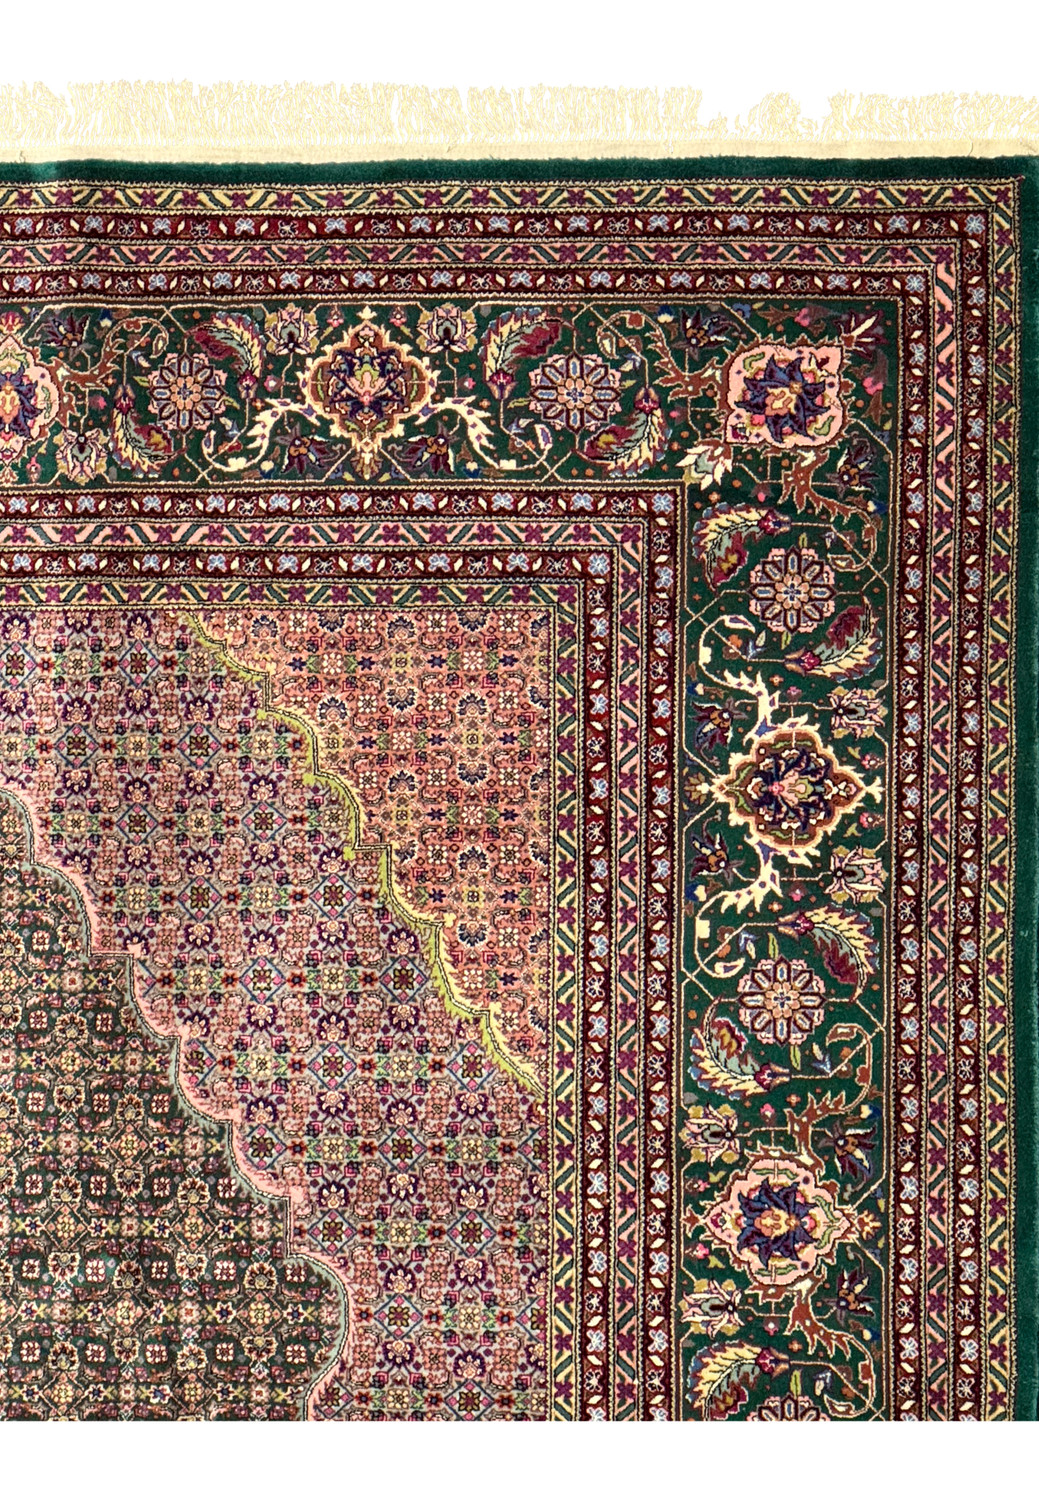 Full view of a Persian Tabriz rug showcasing the Mahi design and ornate borders